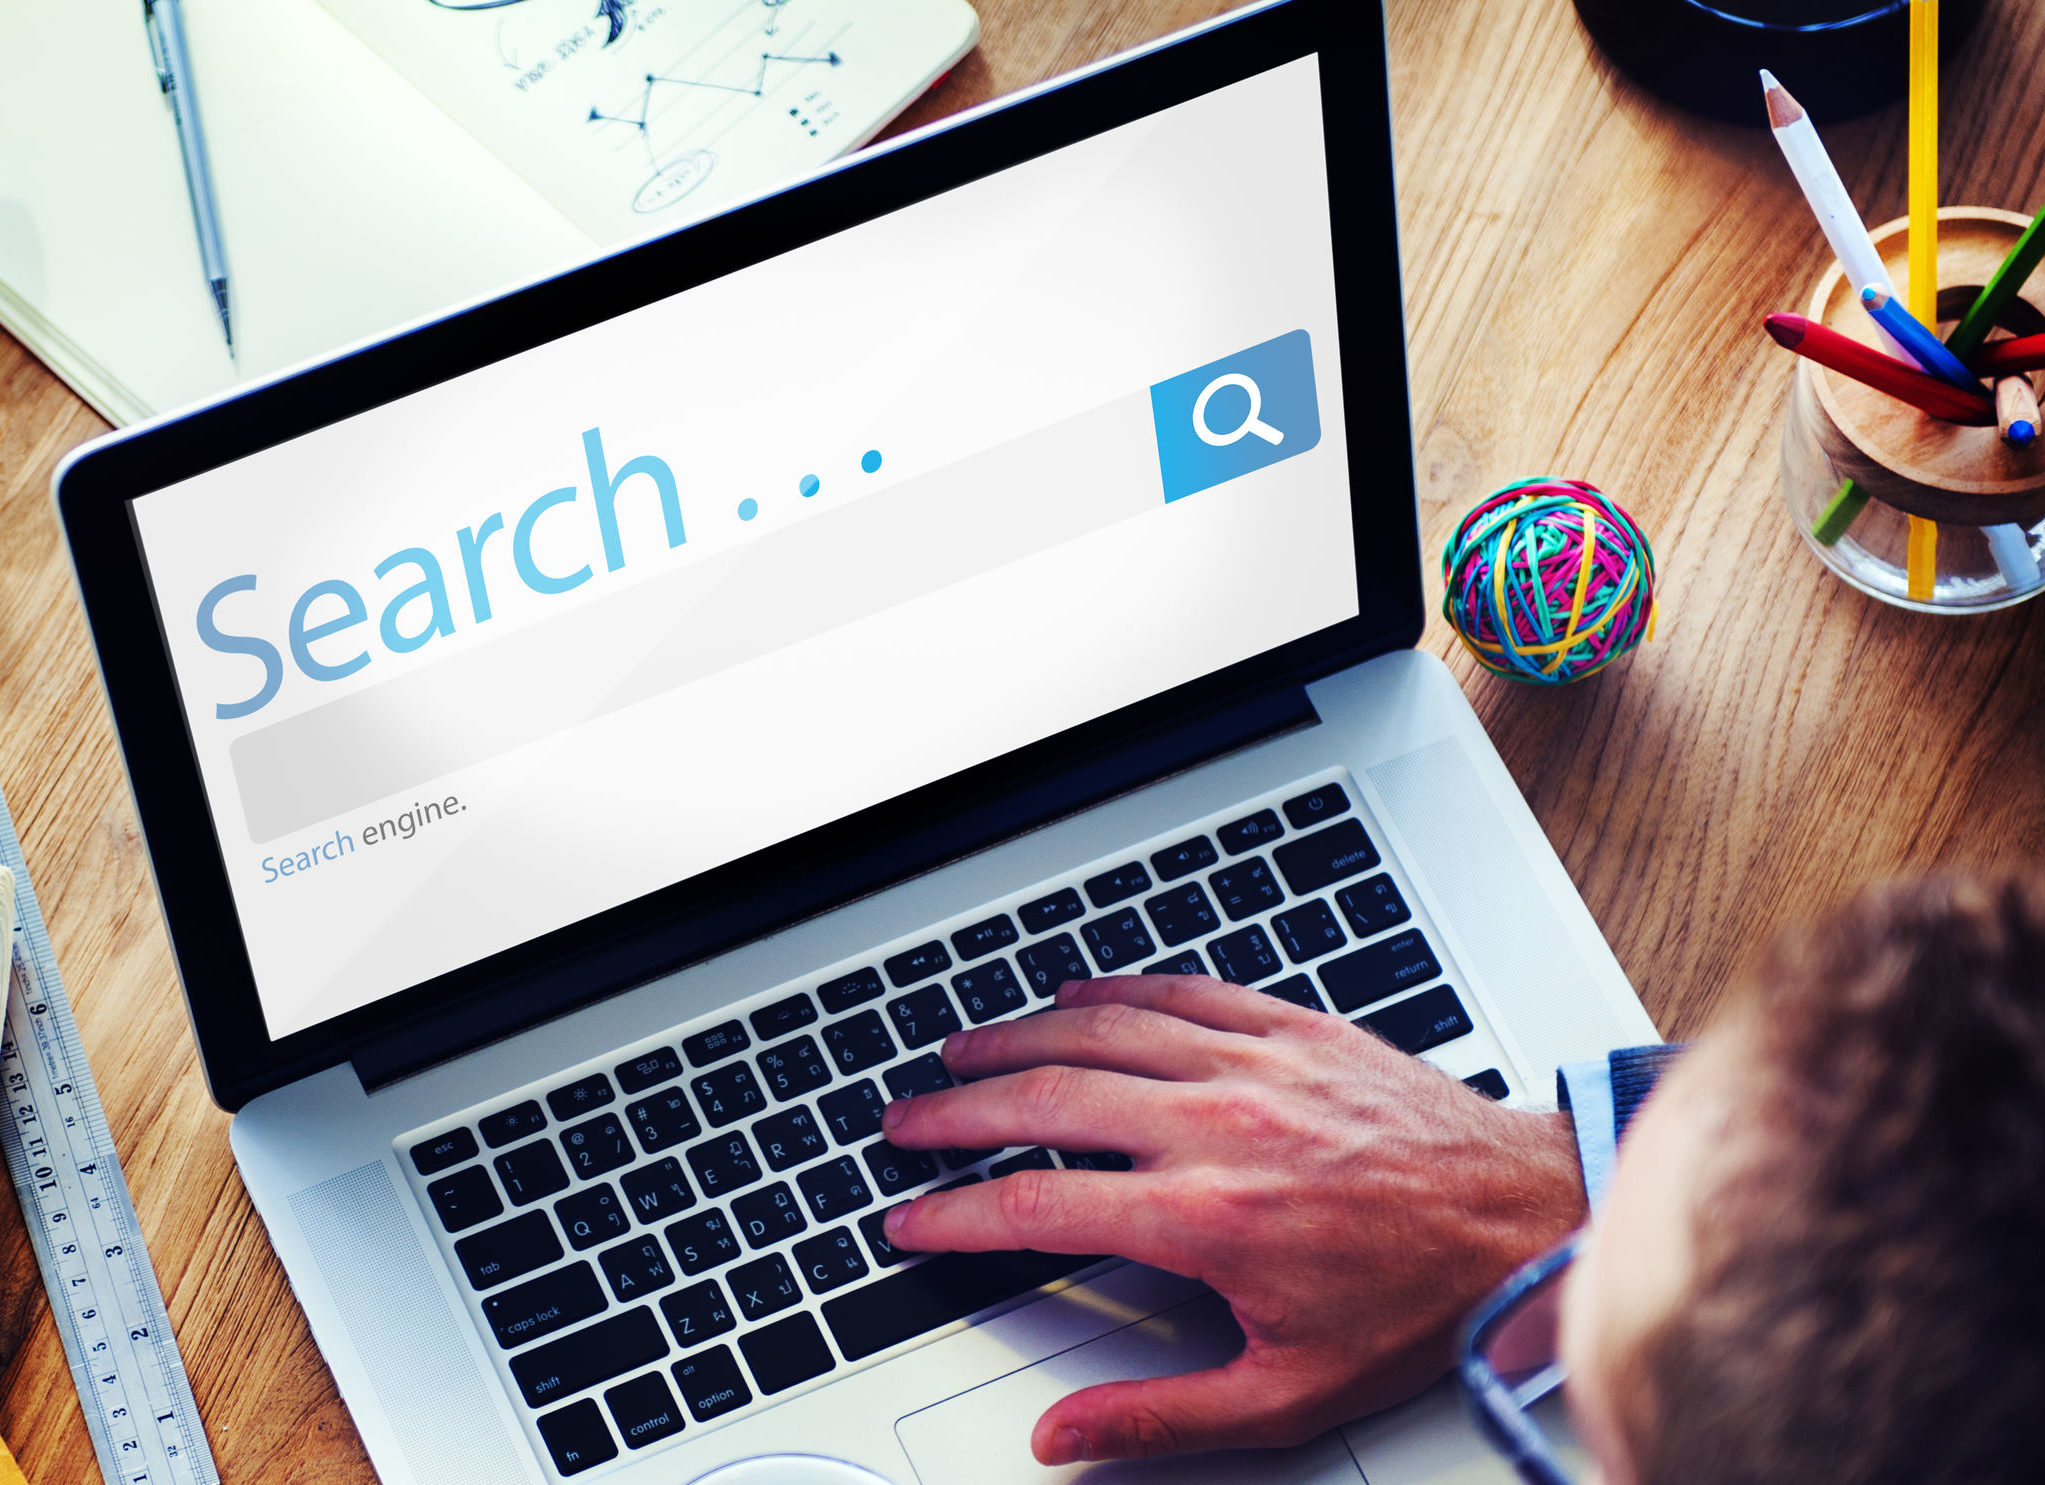 Back to Basics: Search Engine Optimization